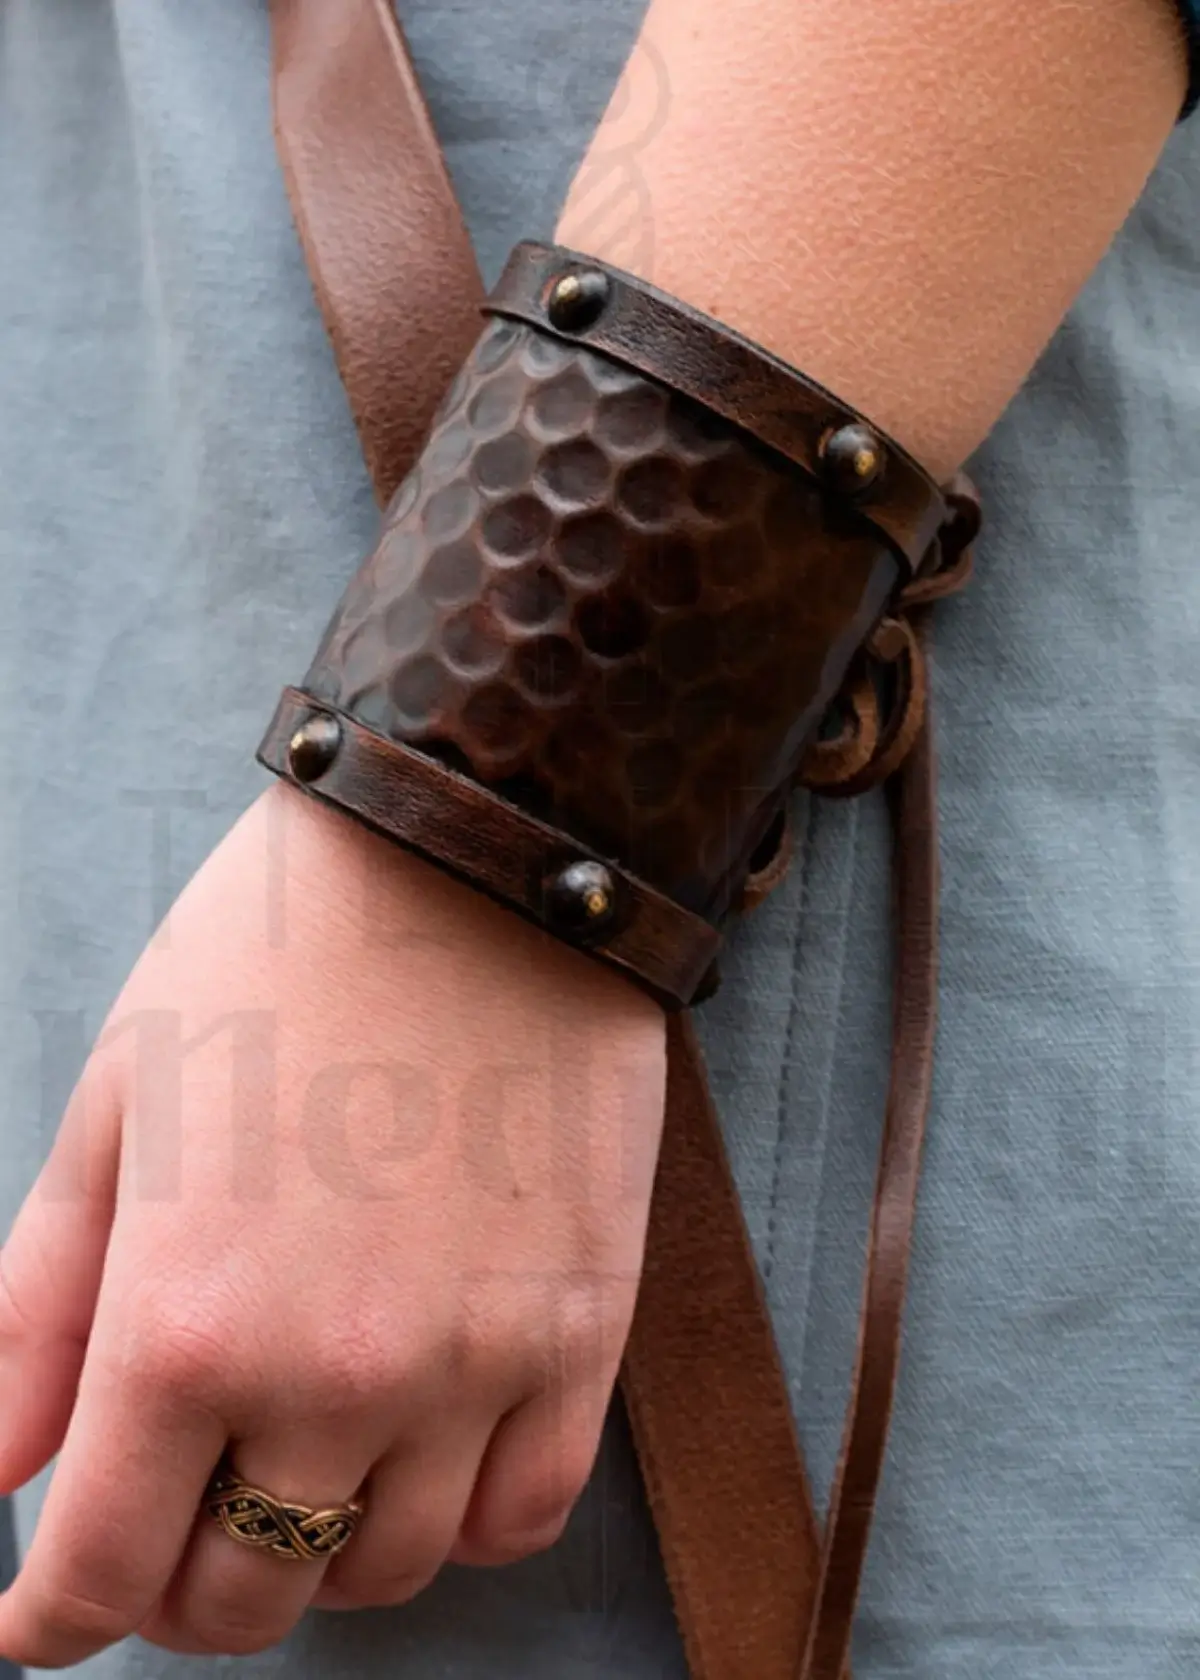 What does a warrior bracelet symbolize?